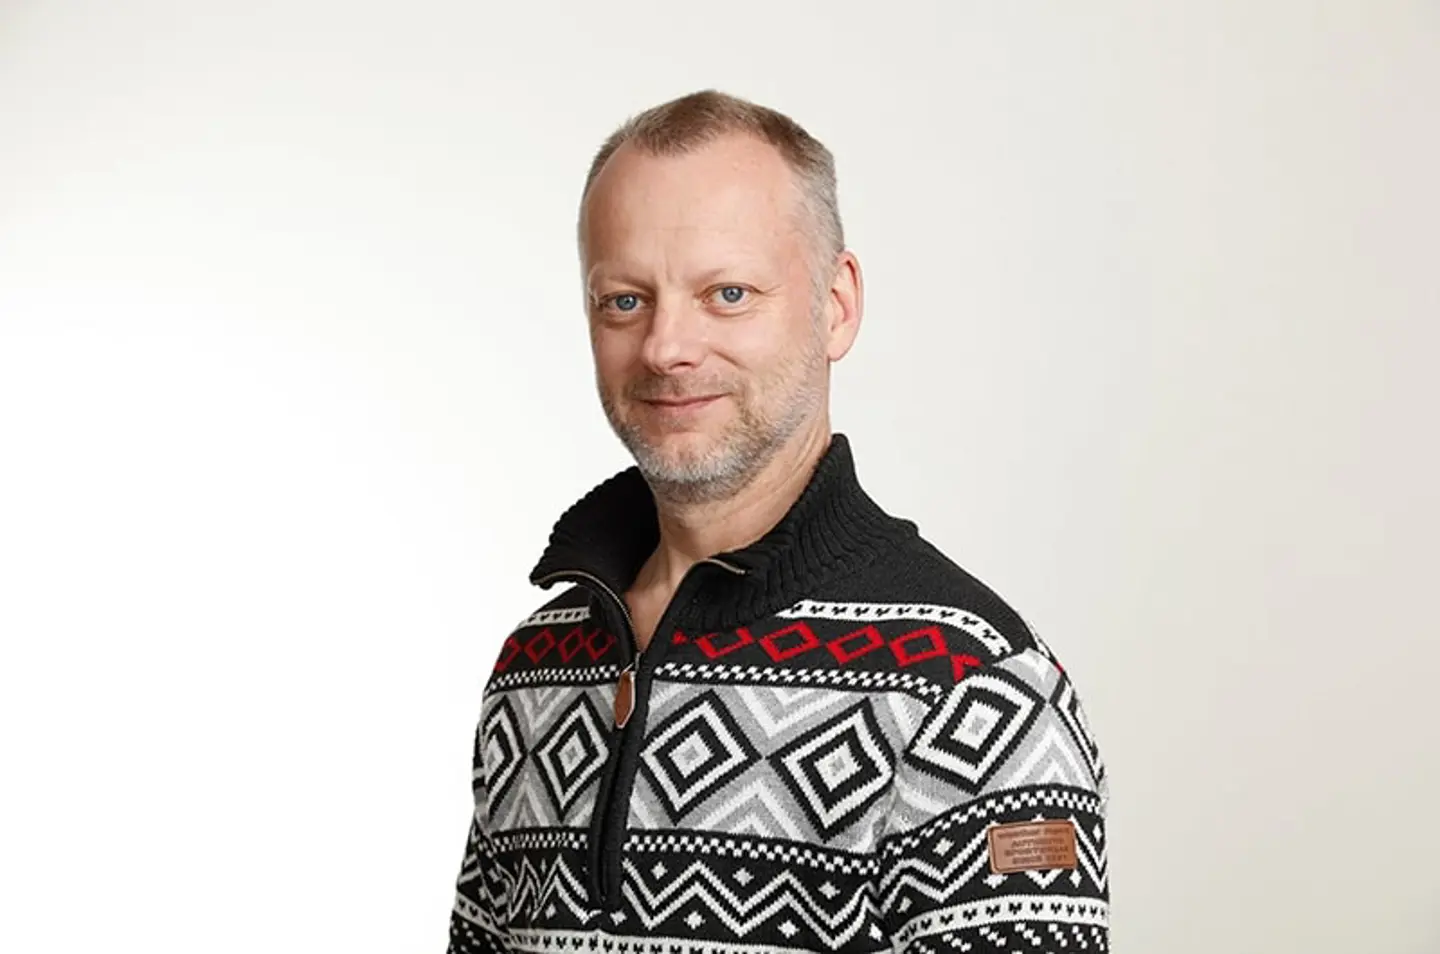  Lars Johansson, co-owner of Solotec.